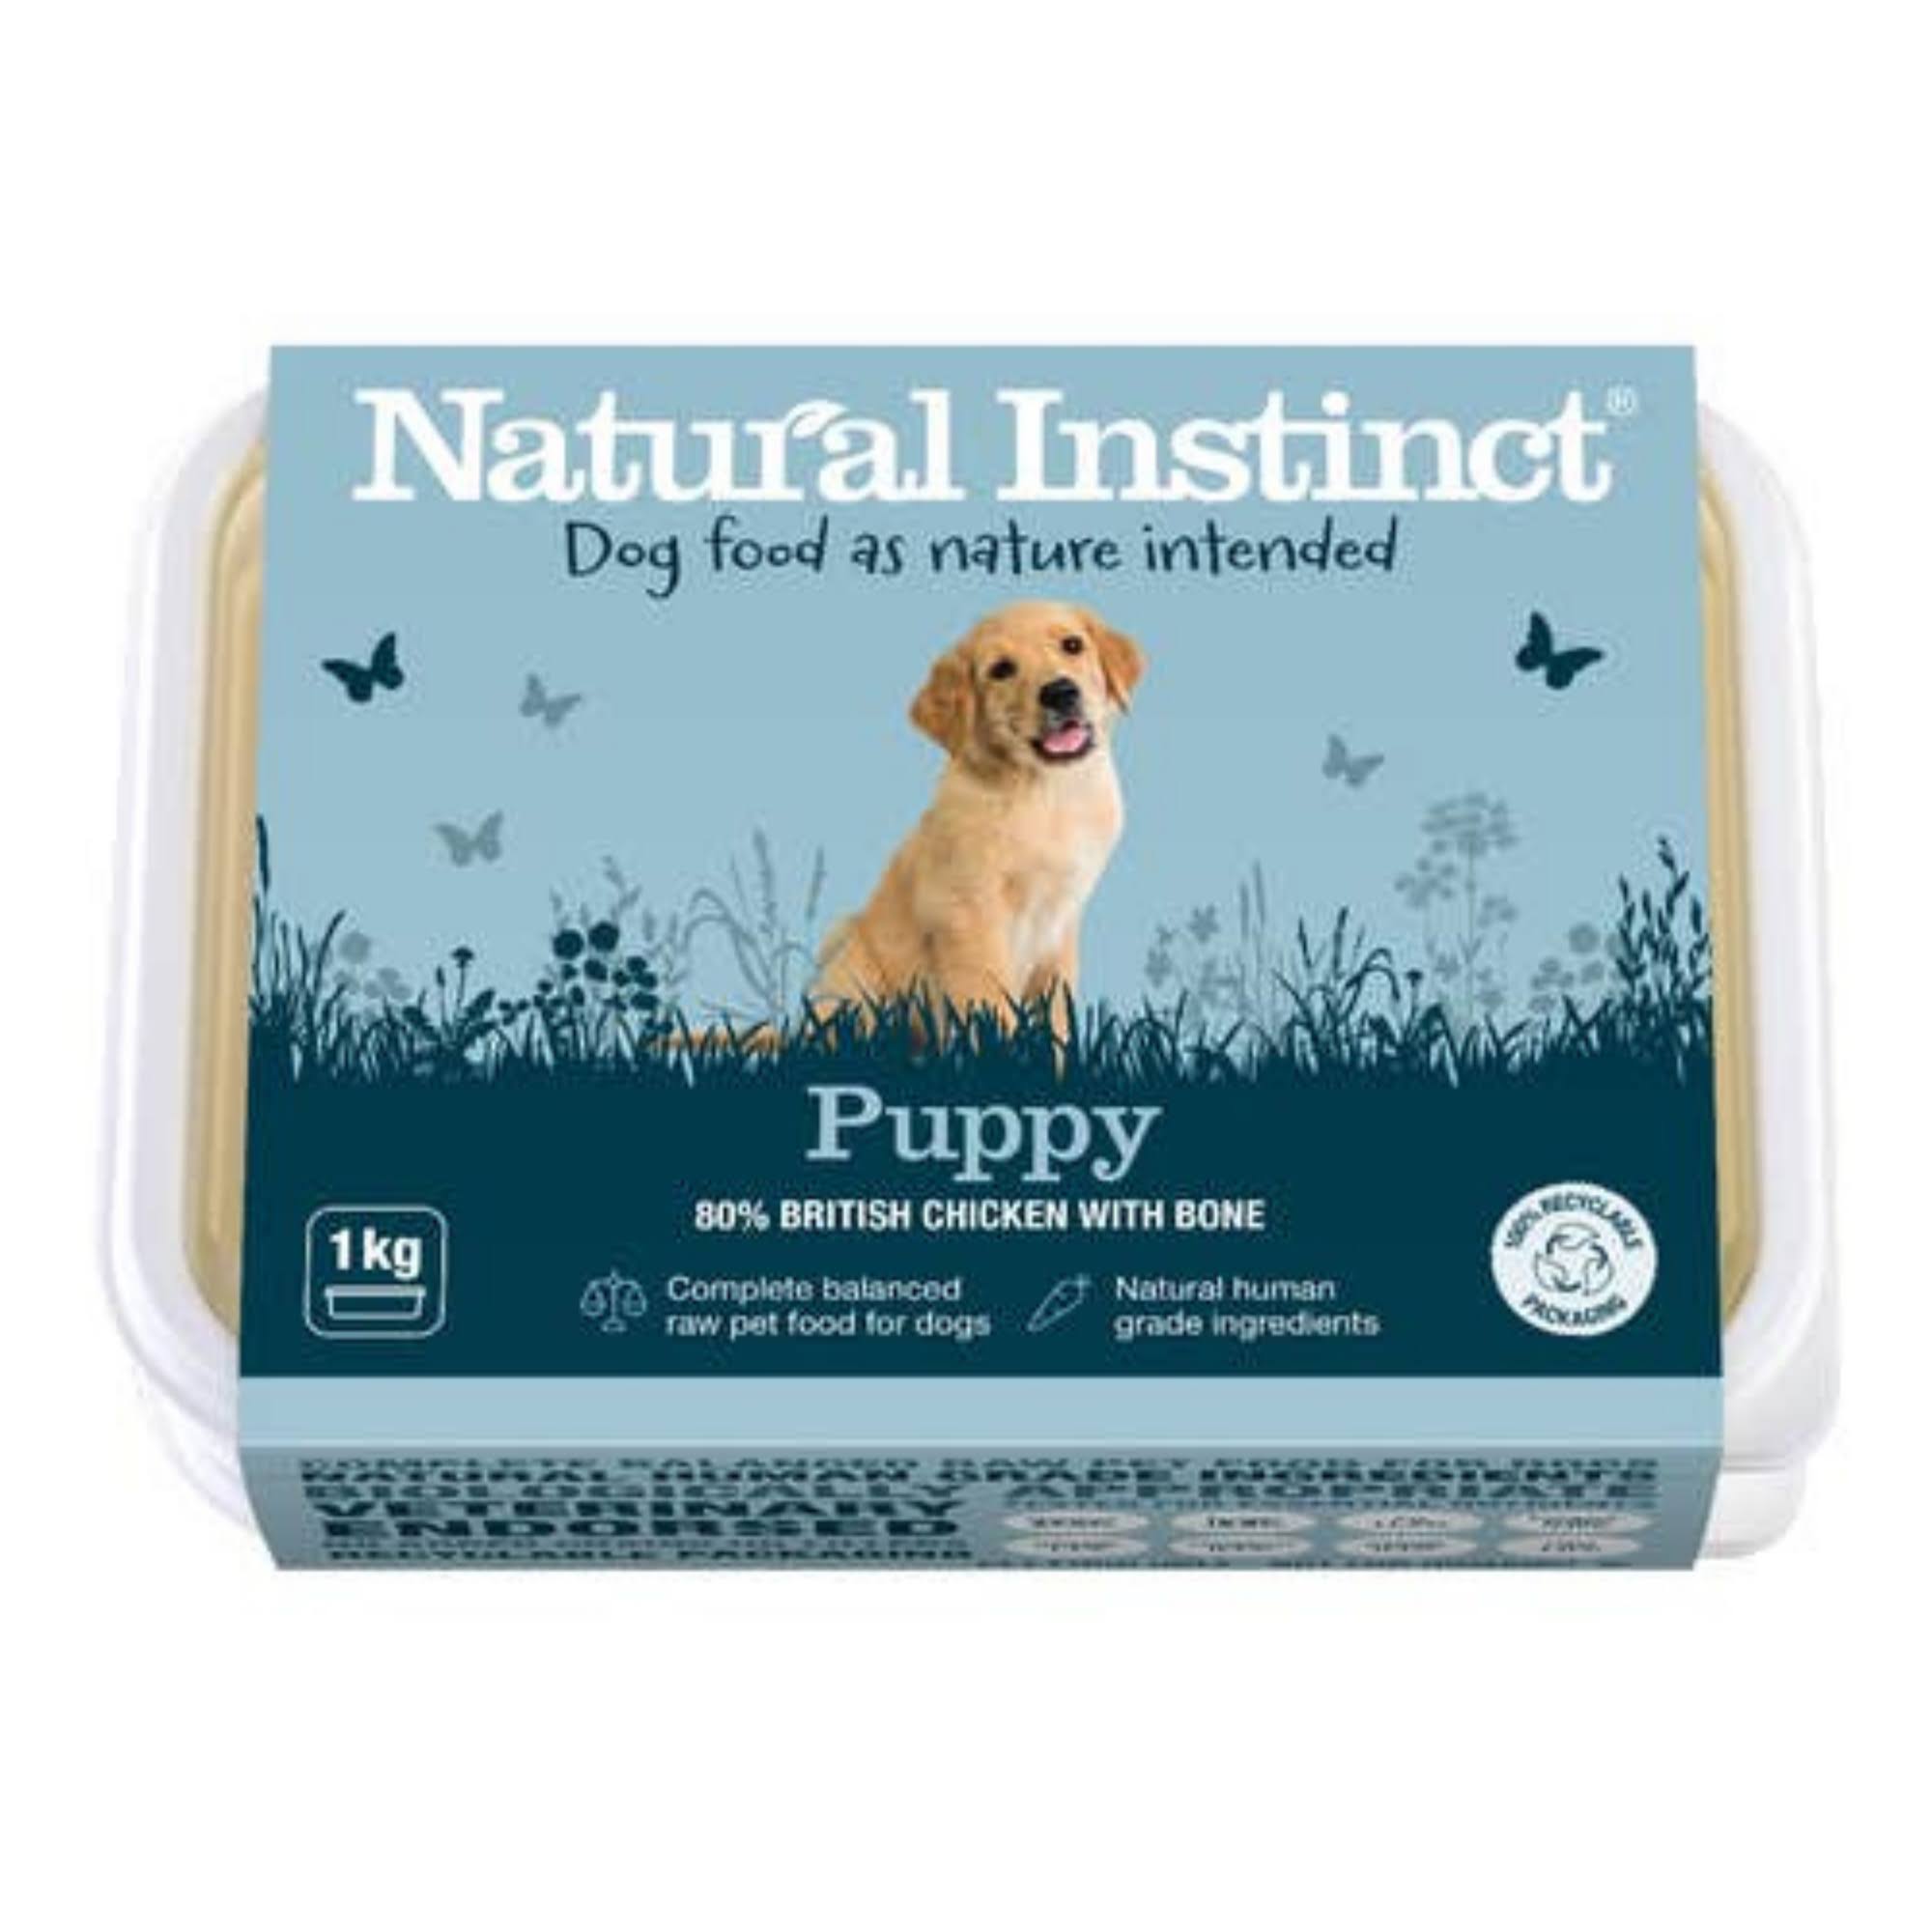 Natural Instinct 1kg Natural Puppy